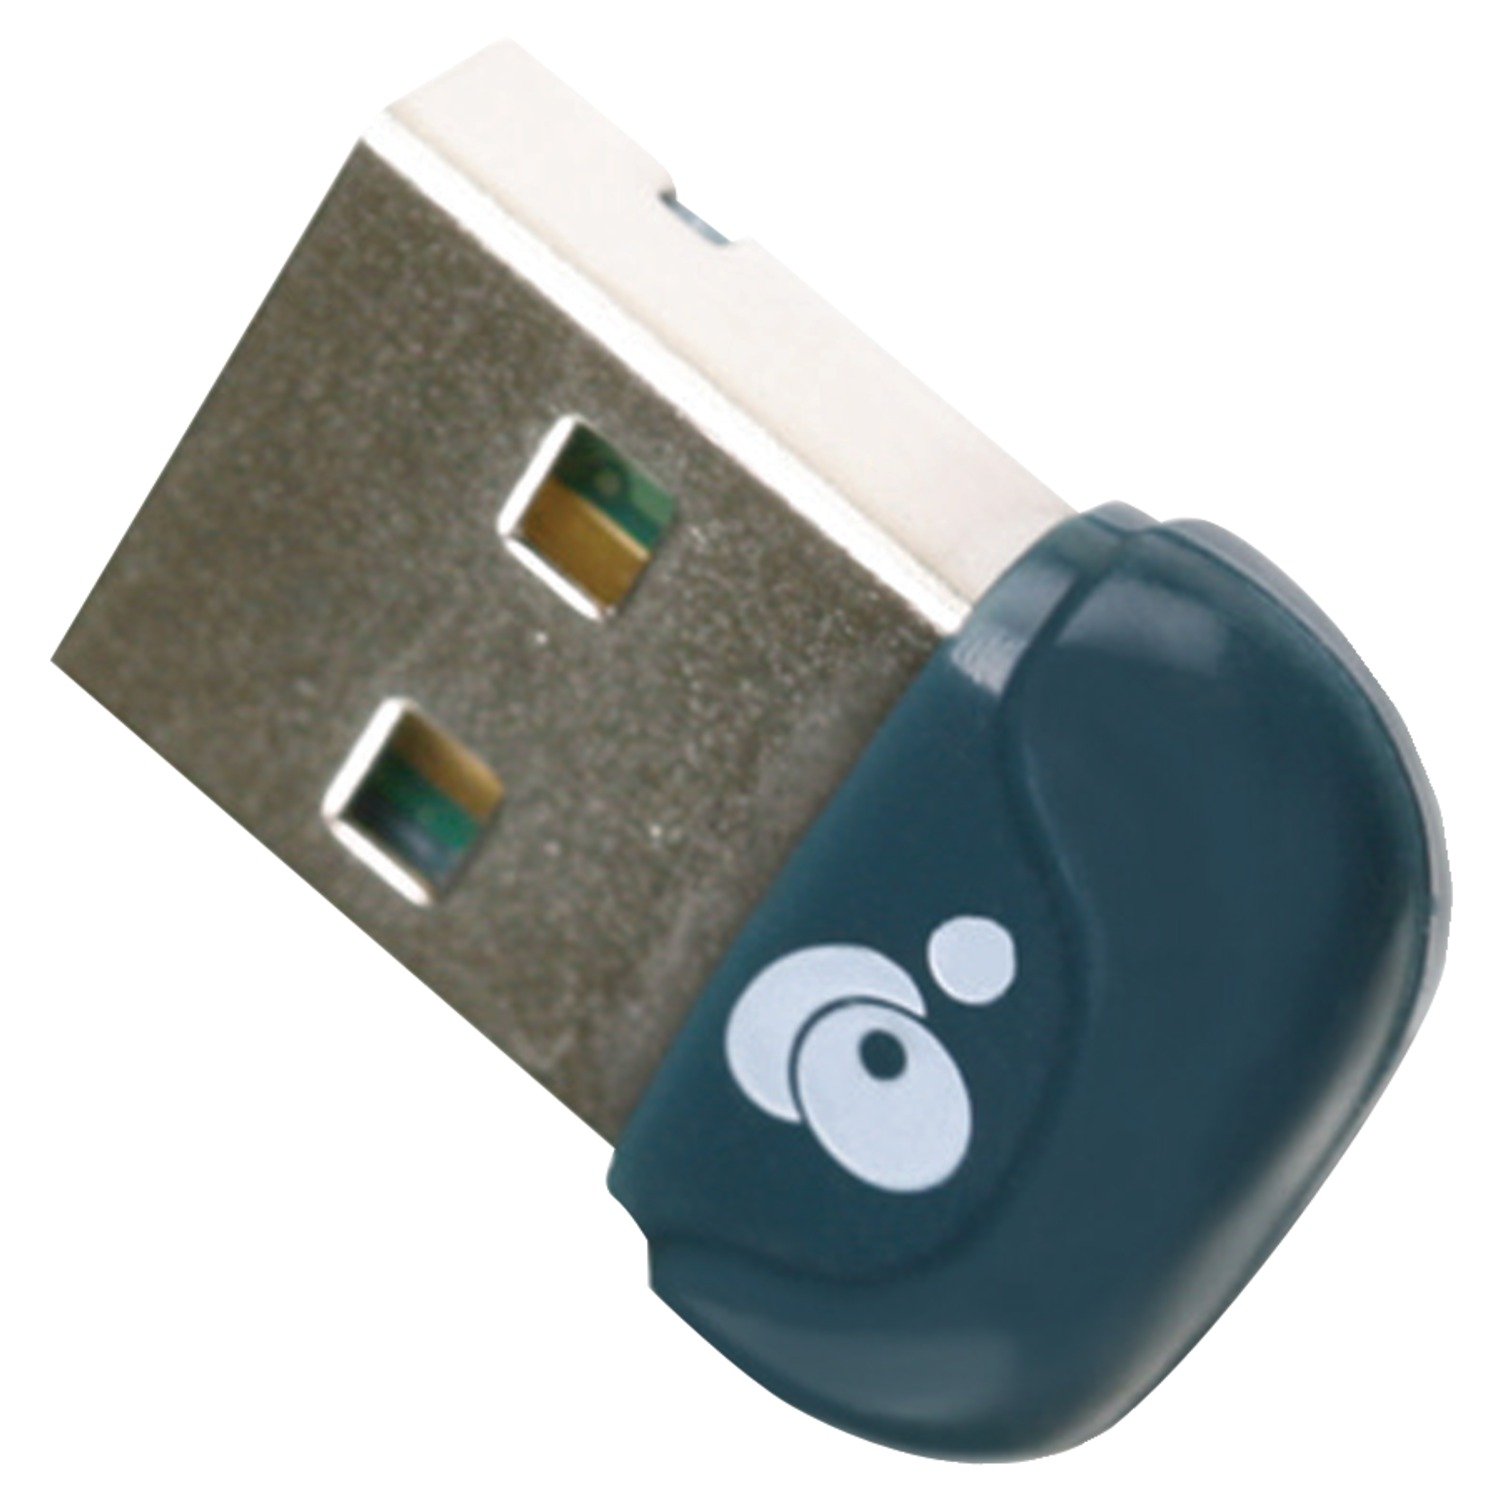 Iogear Bluetooth 4.0 Usb Micro Adapter Driver For Mac